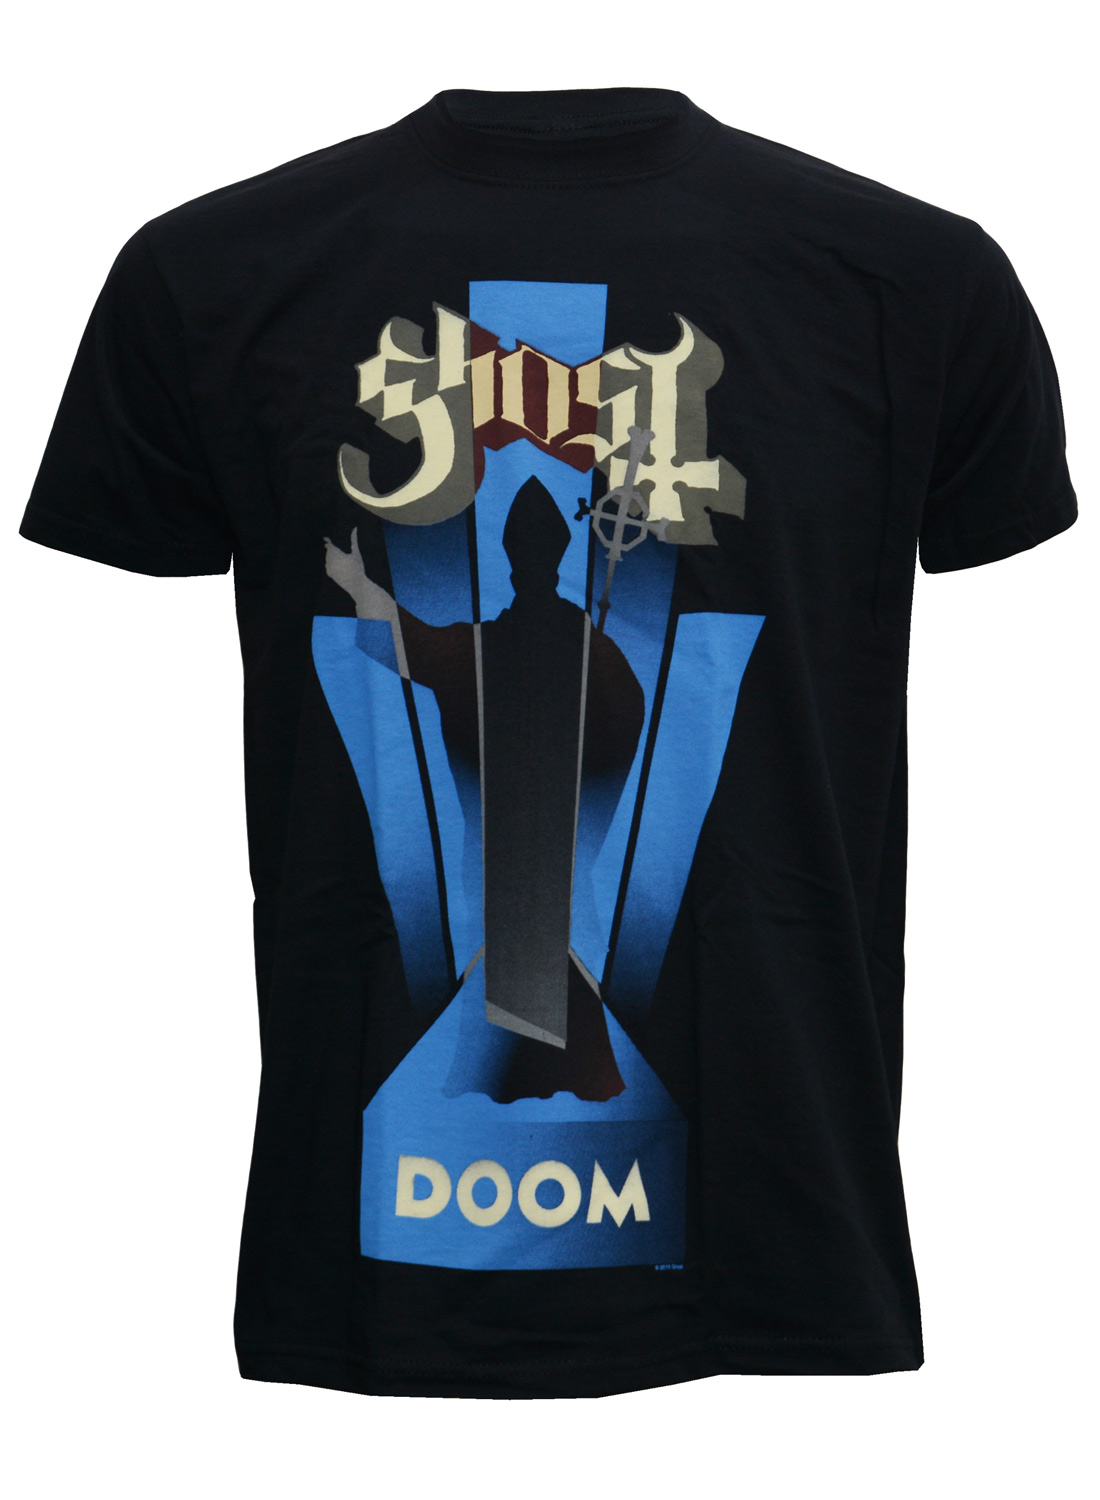 Ghost Doom T-shirt